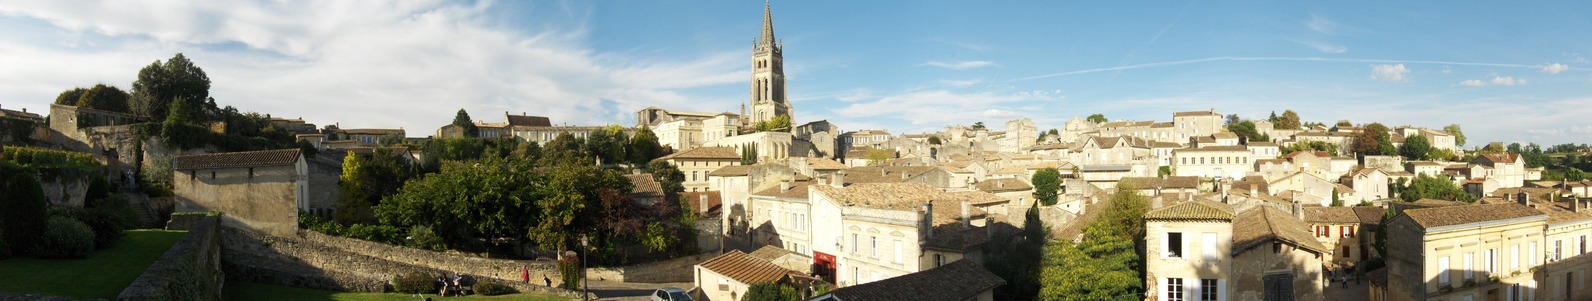 Saint Emilion panoramic view